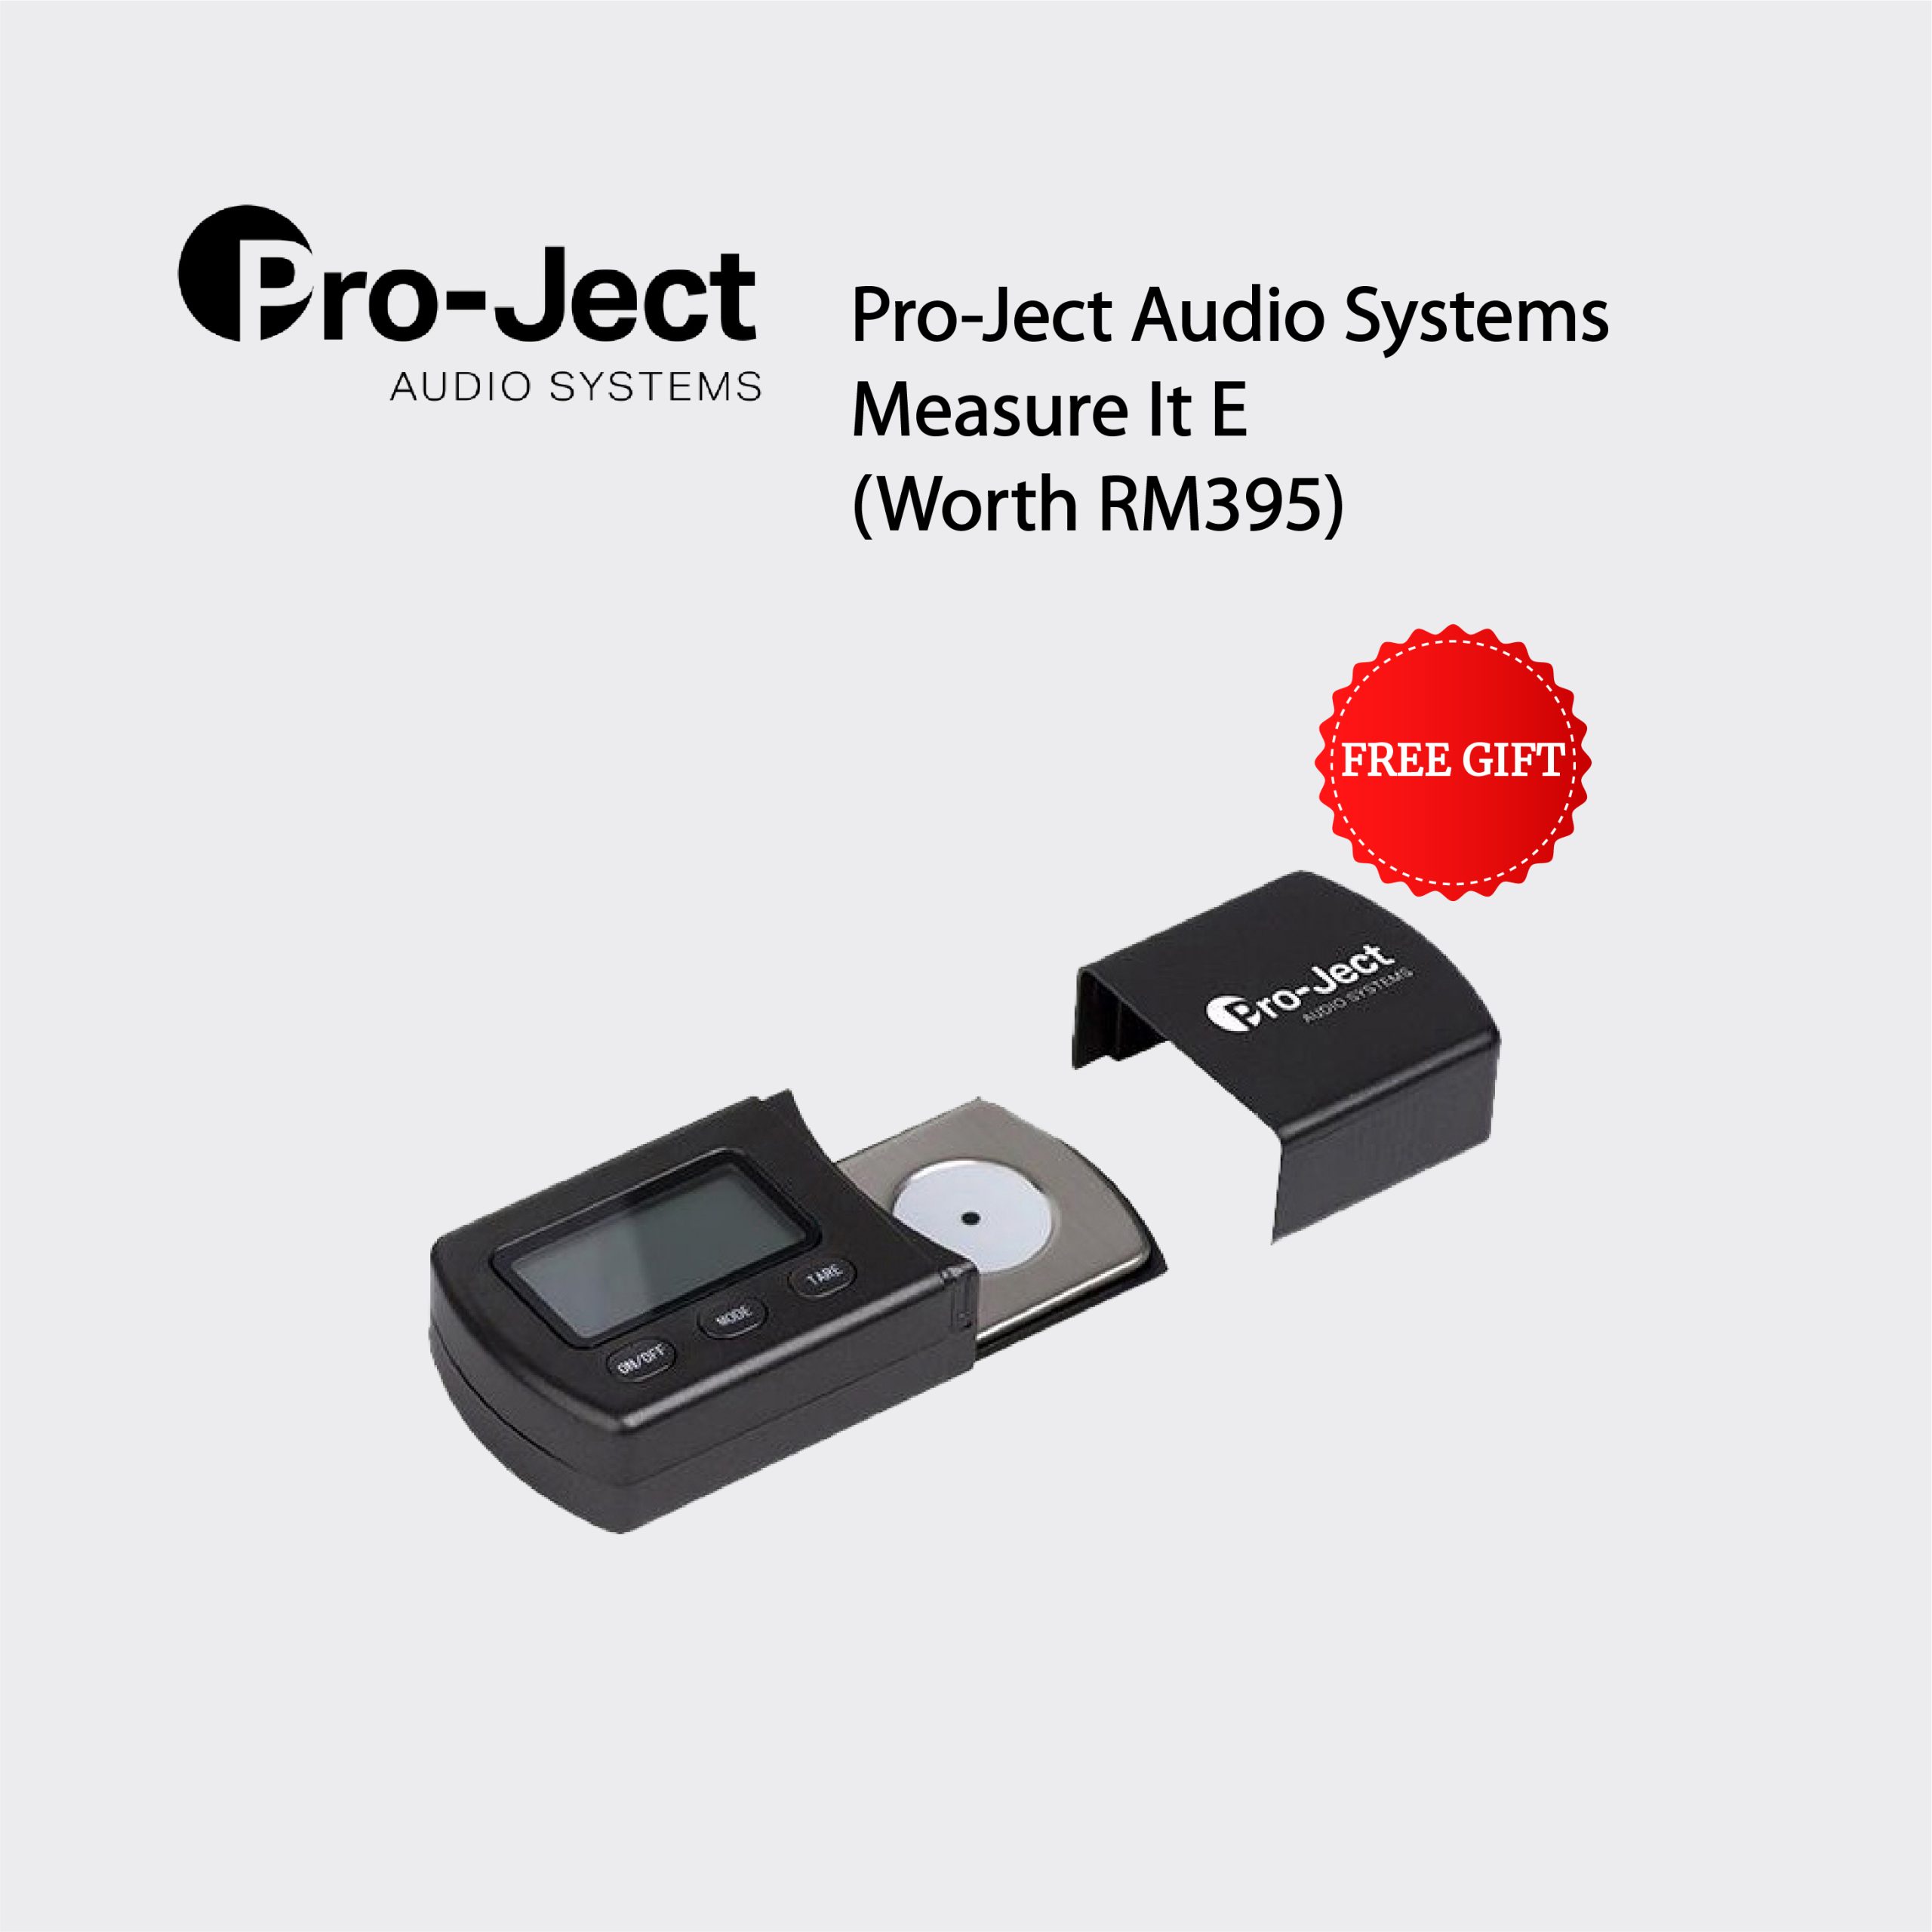 Connect it Phono DS 5P > Mini XLR - Pro-Ject Audio USA